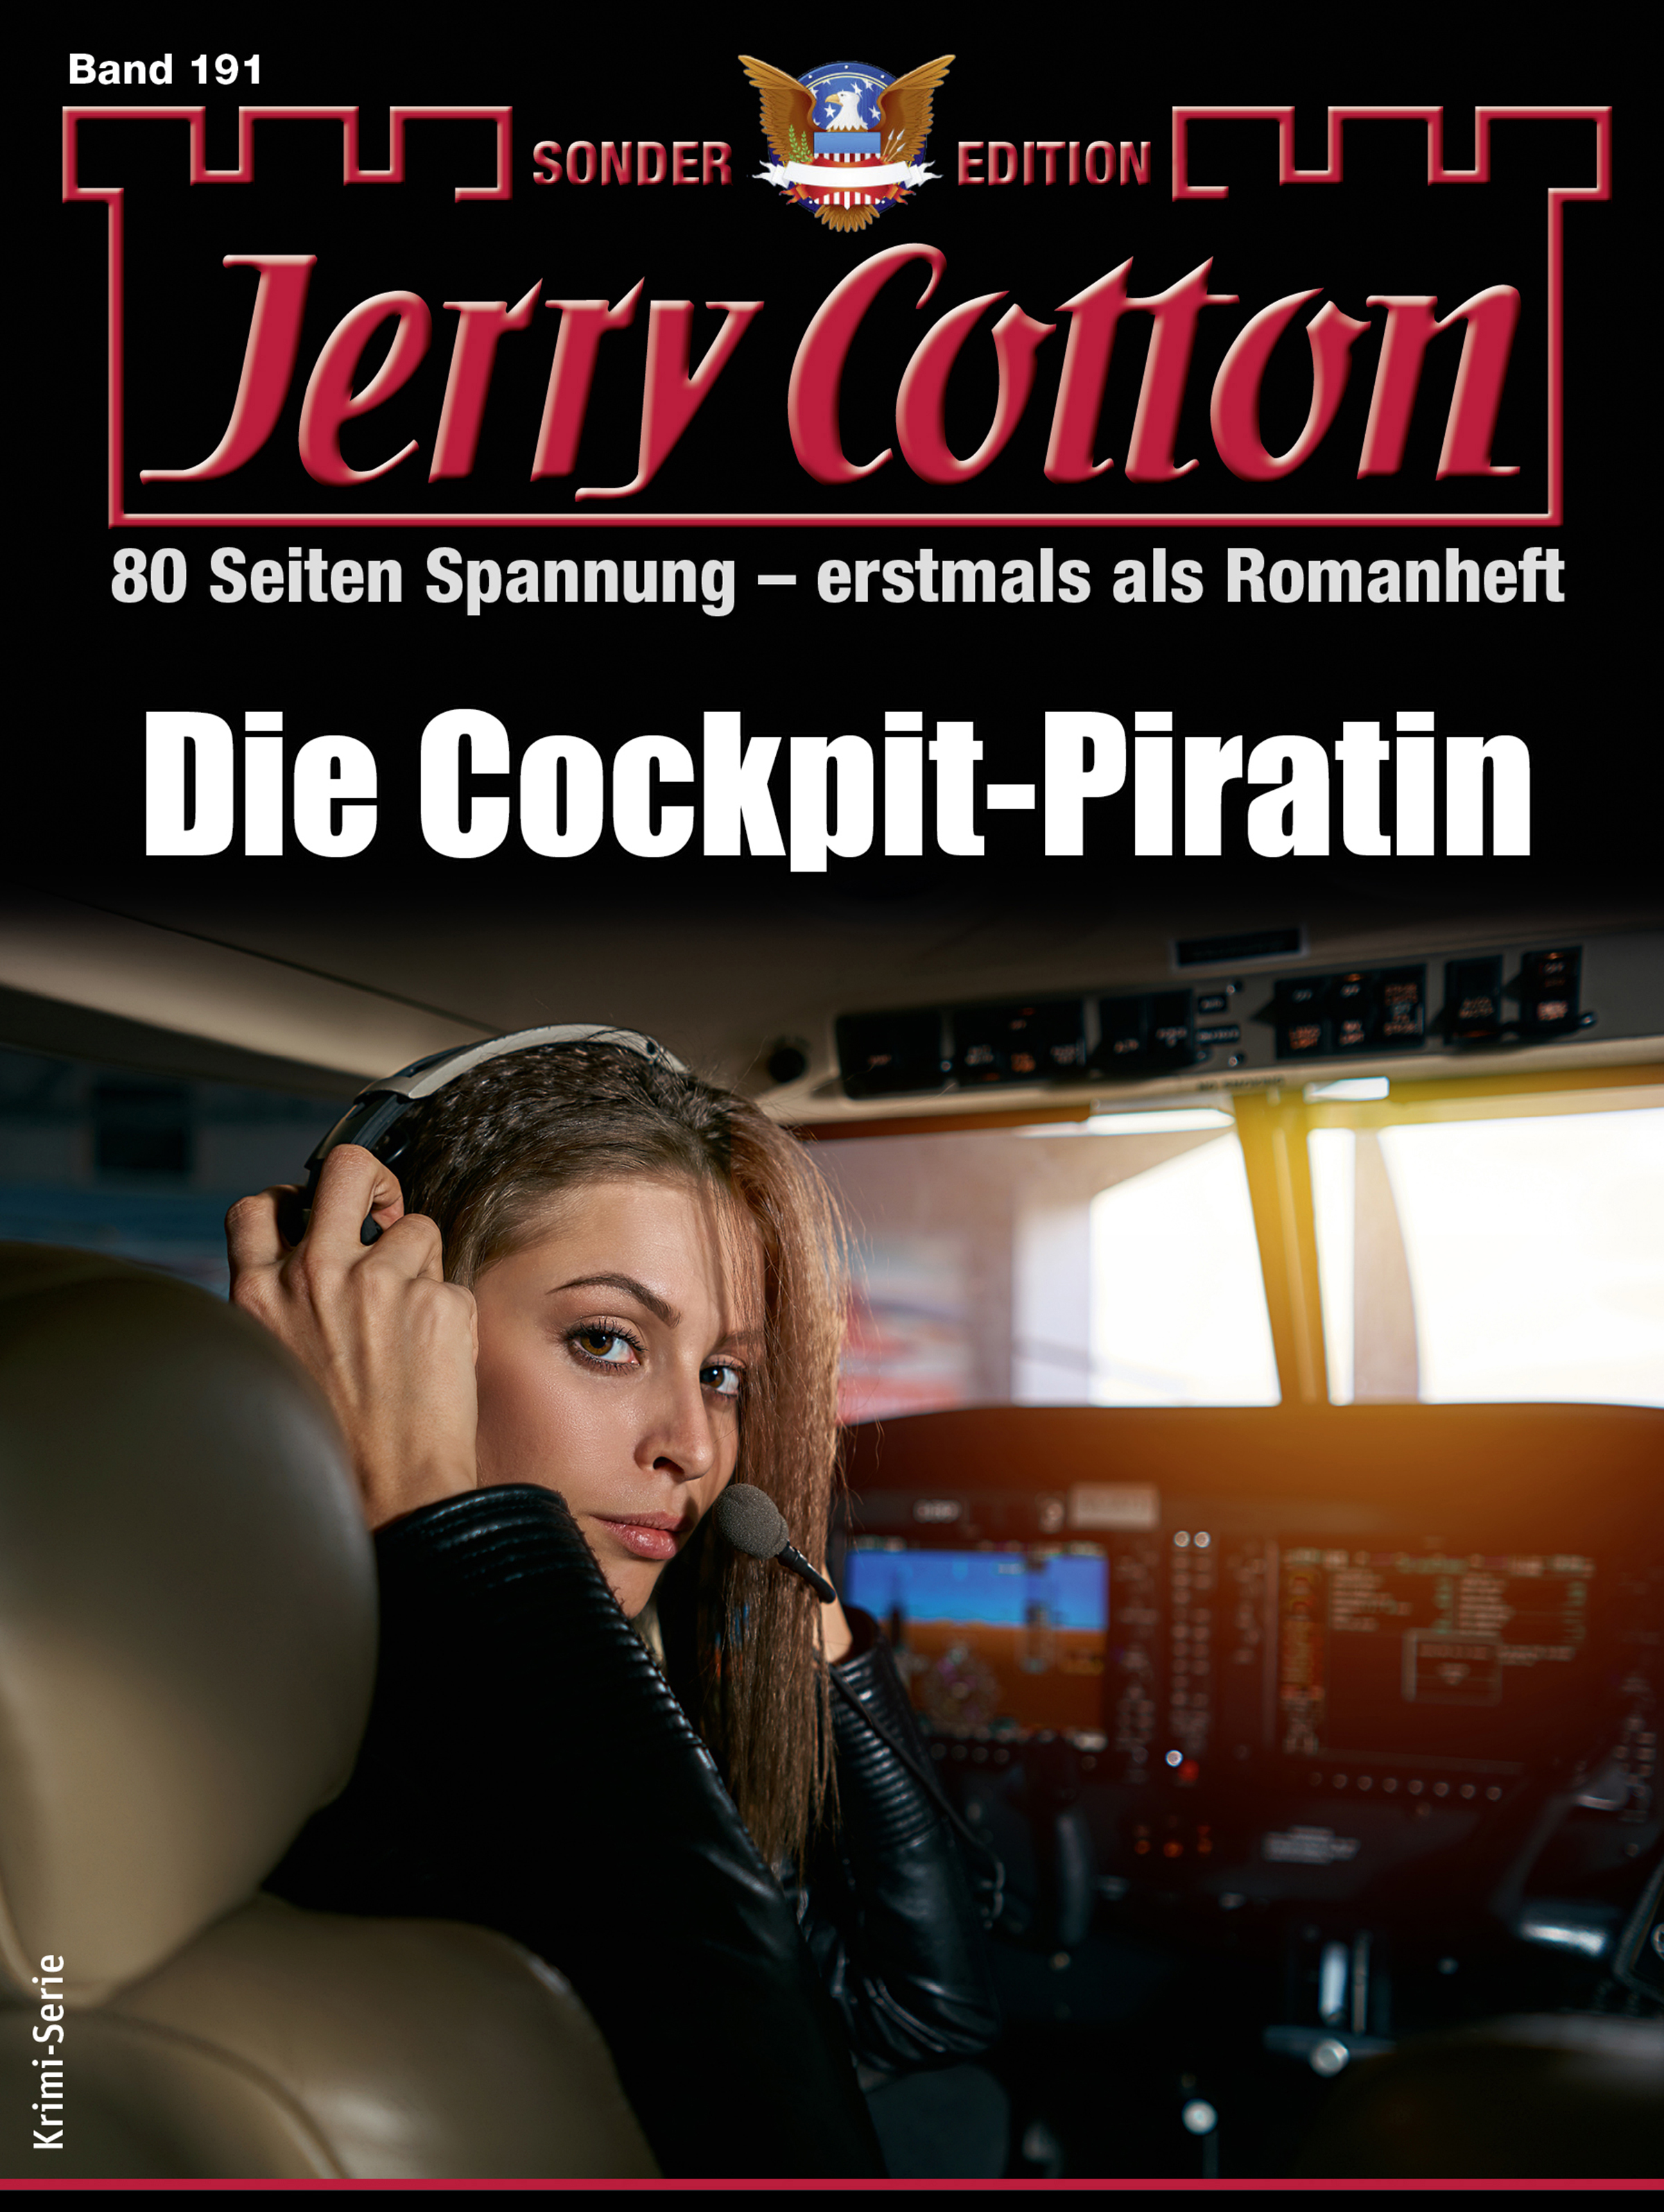 Jerry Cotton Sonder-Edition 191